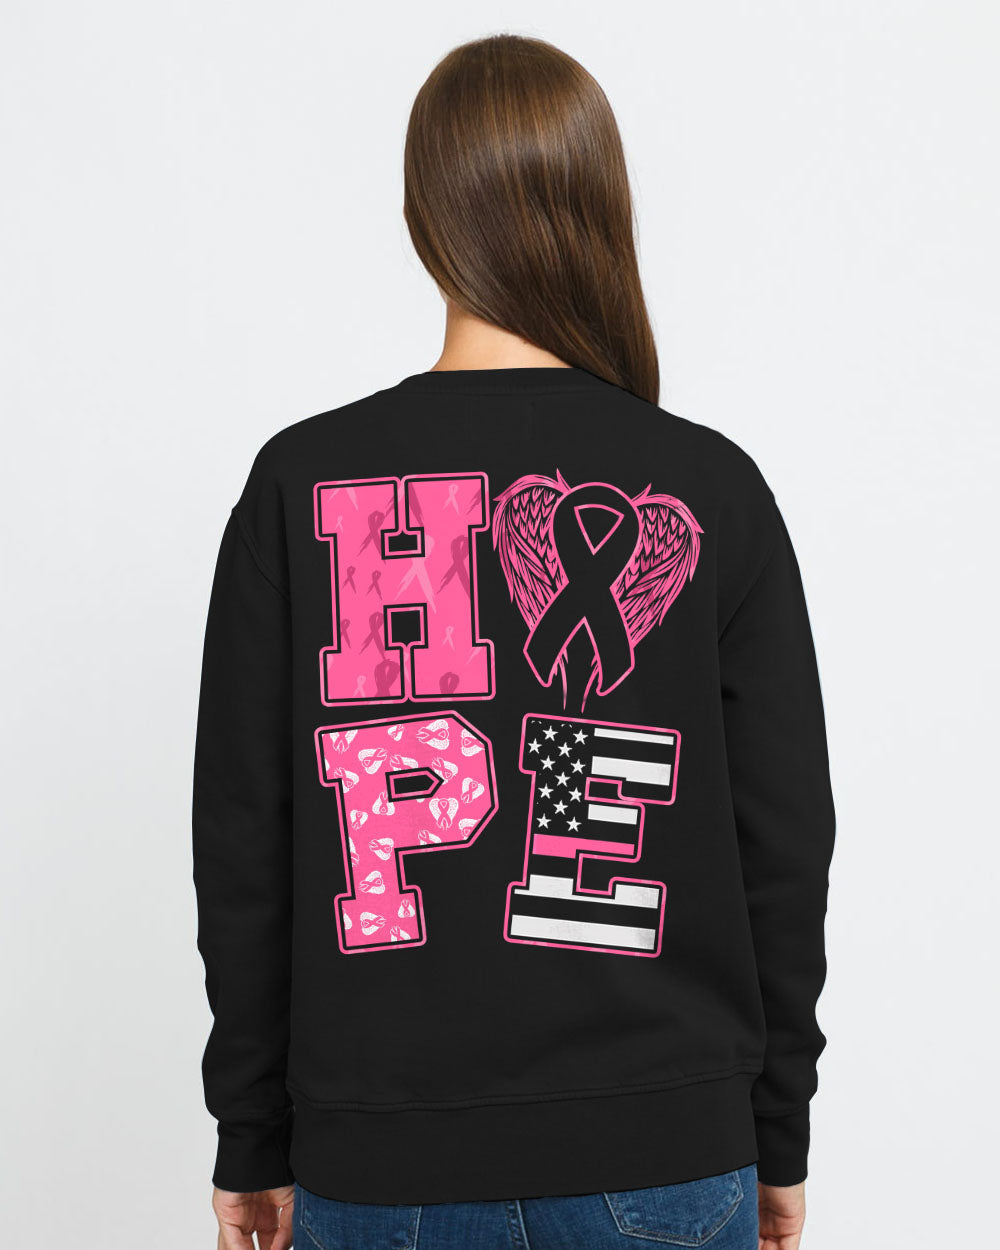 Hope Wings Women's Breast Cancer Awareness Sweatshirt